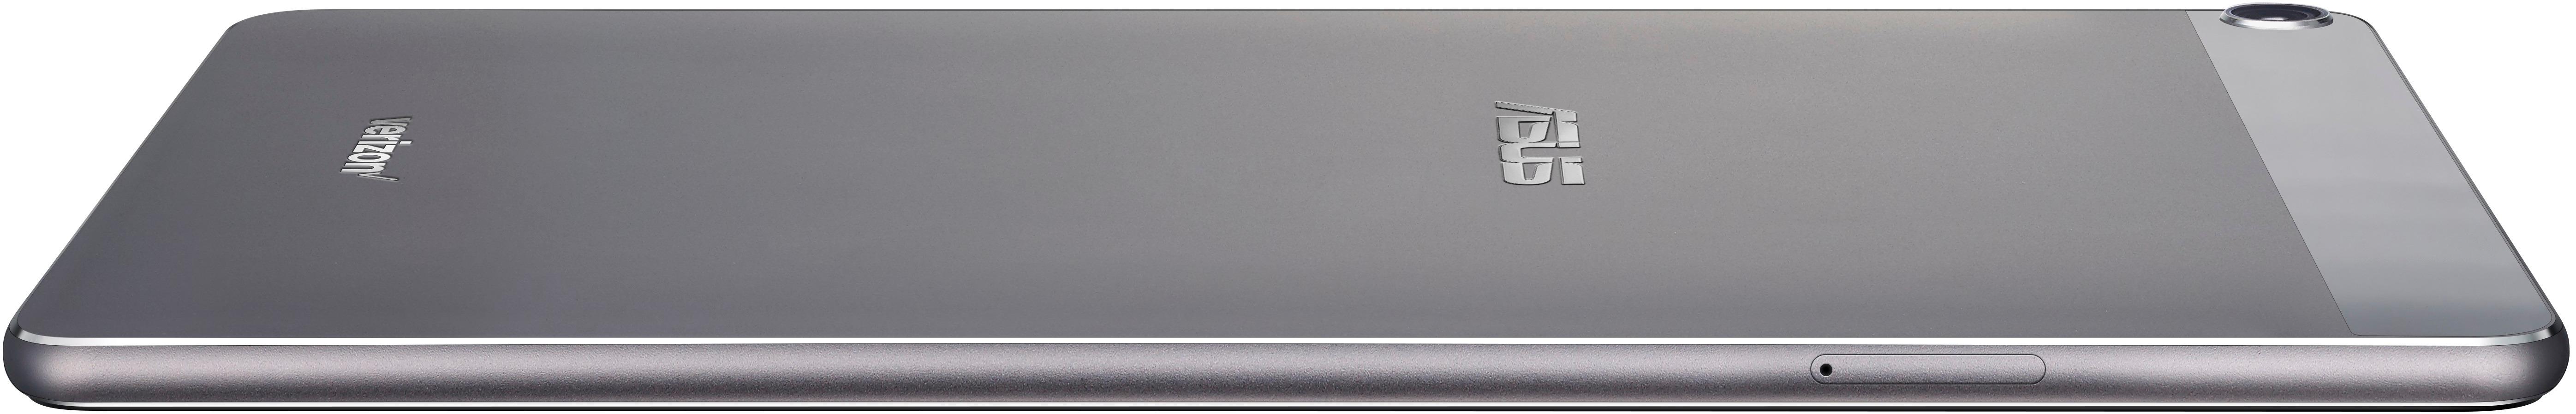 Slate Gray Renewed Verizon 4G LTE Tablet 7.9 S-IPS ASUS Zenpad Z8s ZT582KL Wi-Fi